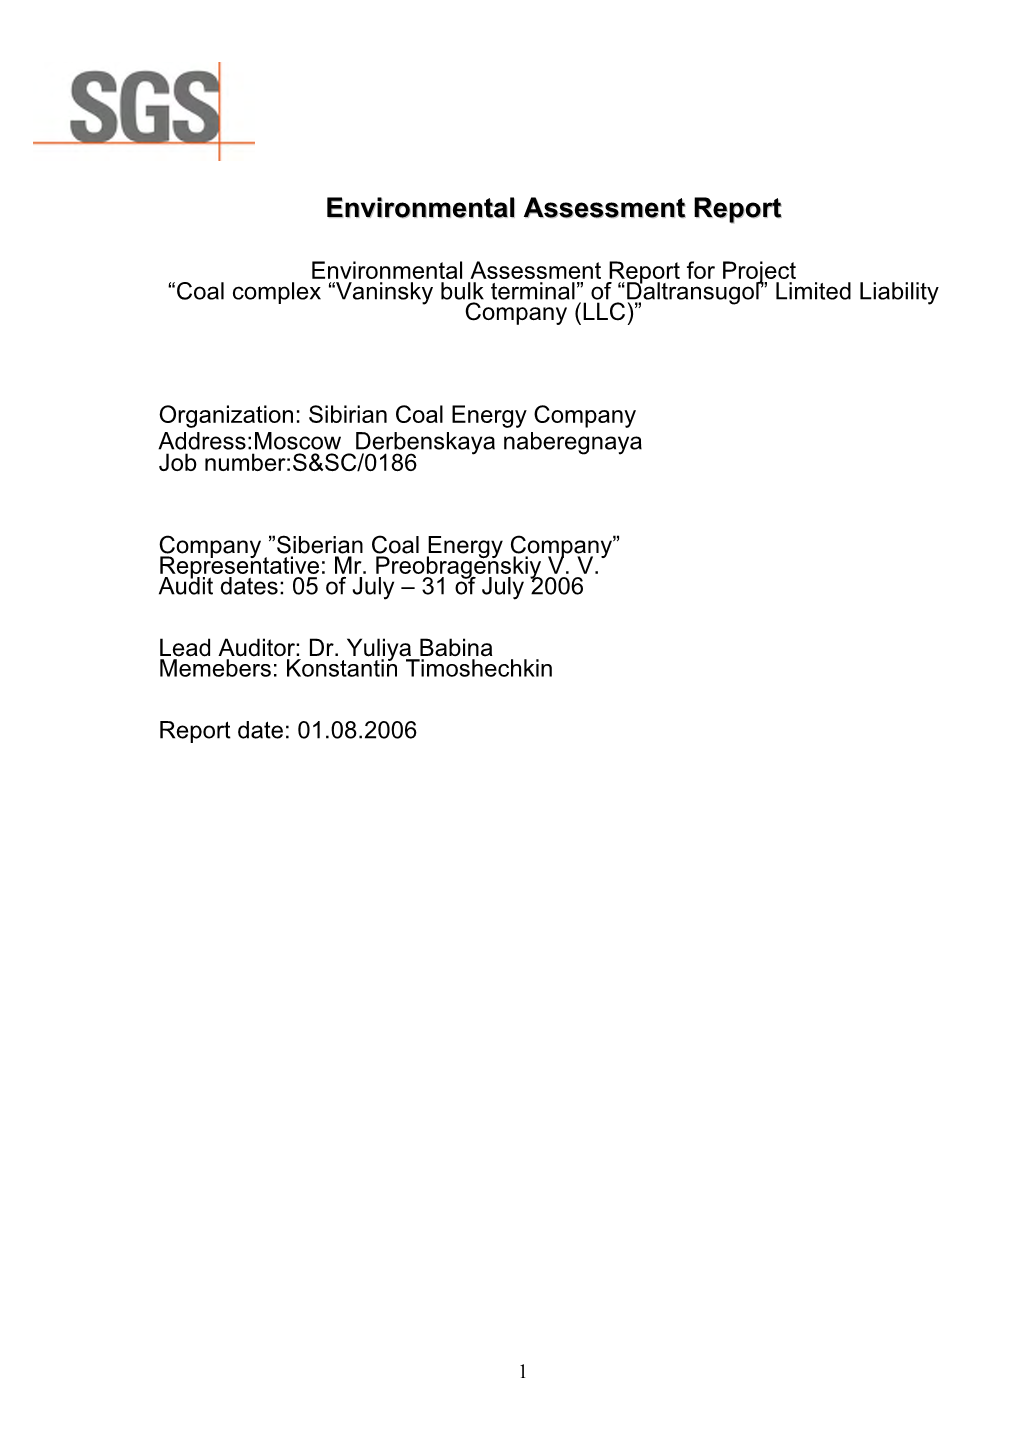 Environmental Assessment Report for Project “Coal Complex “Vaninsky Bulk Terminal” of “Daltransugol” Limited Liability Company (LLC)”